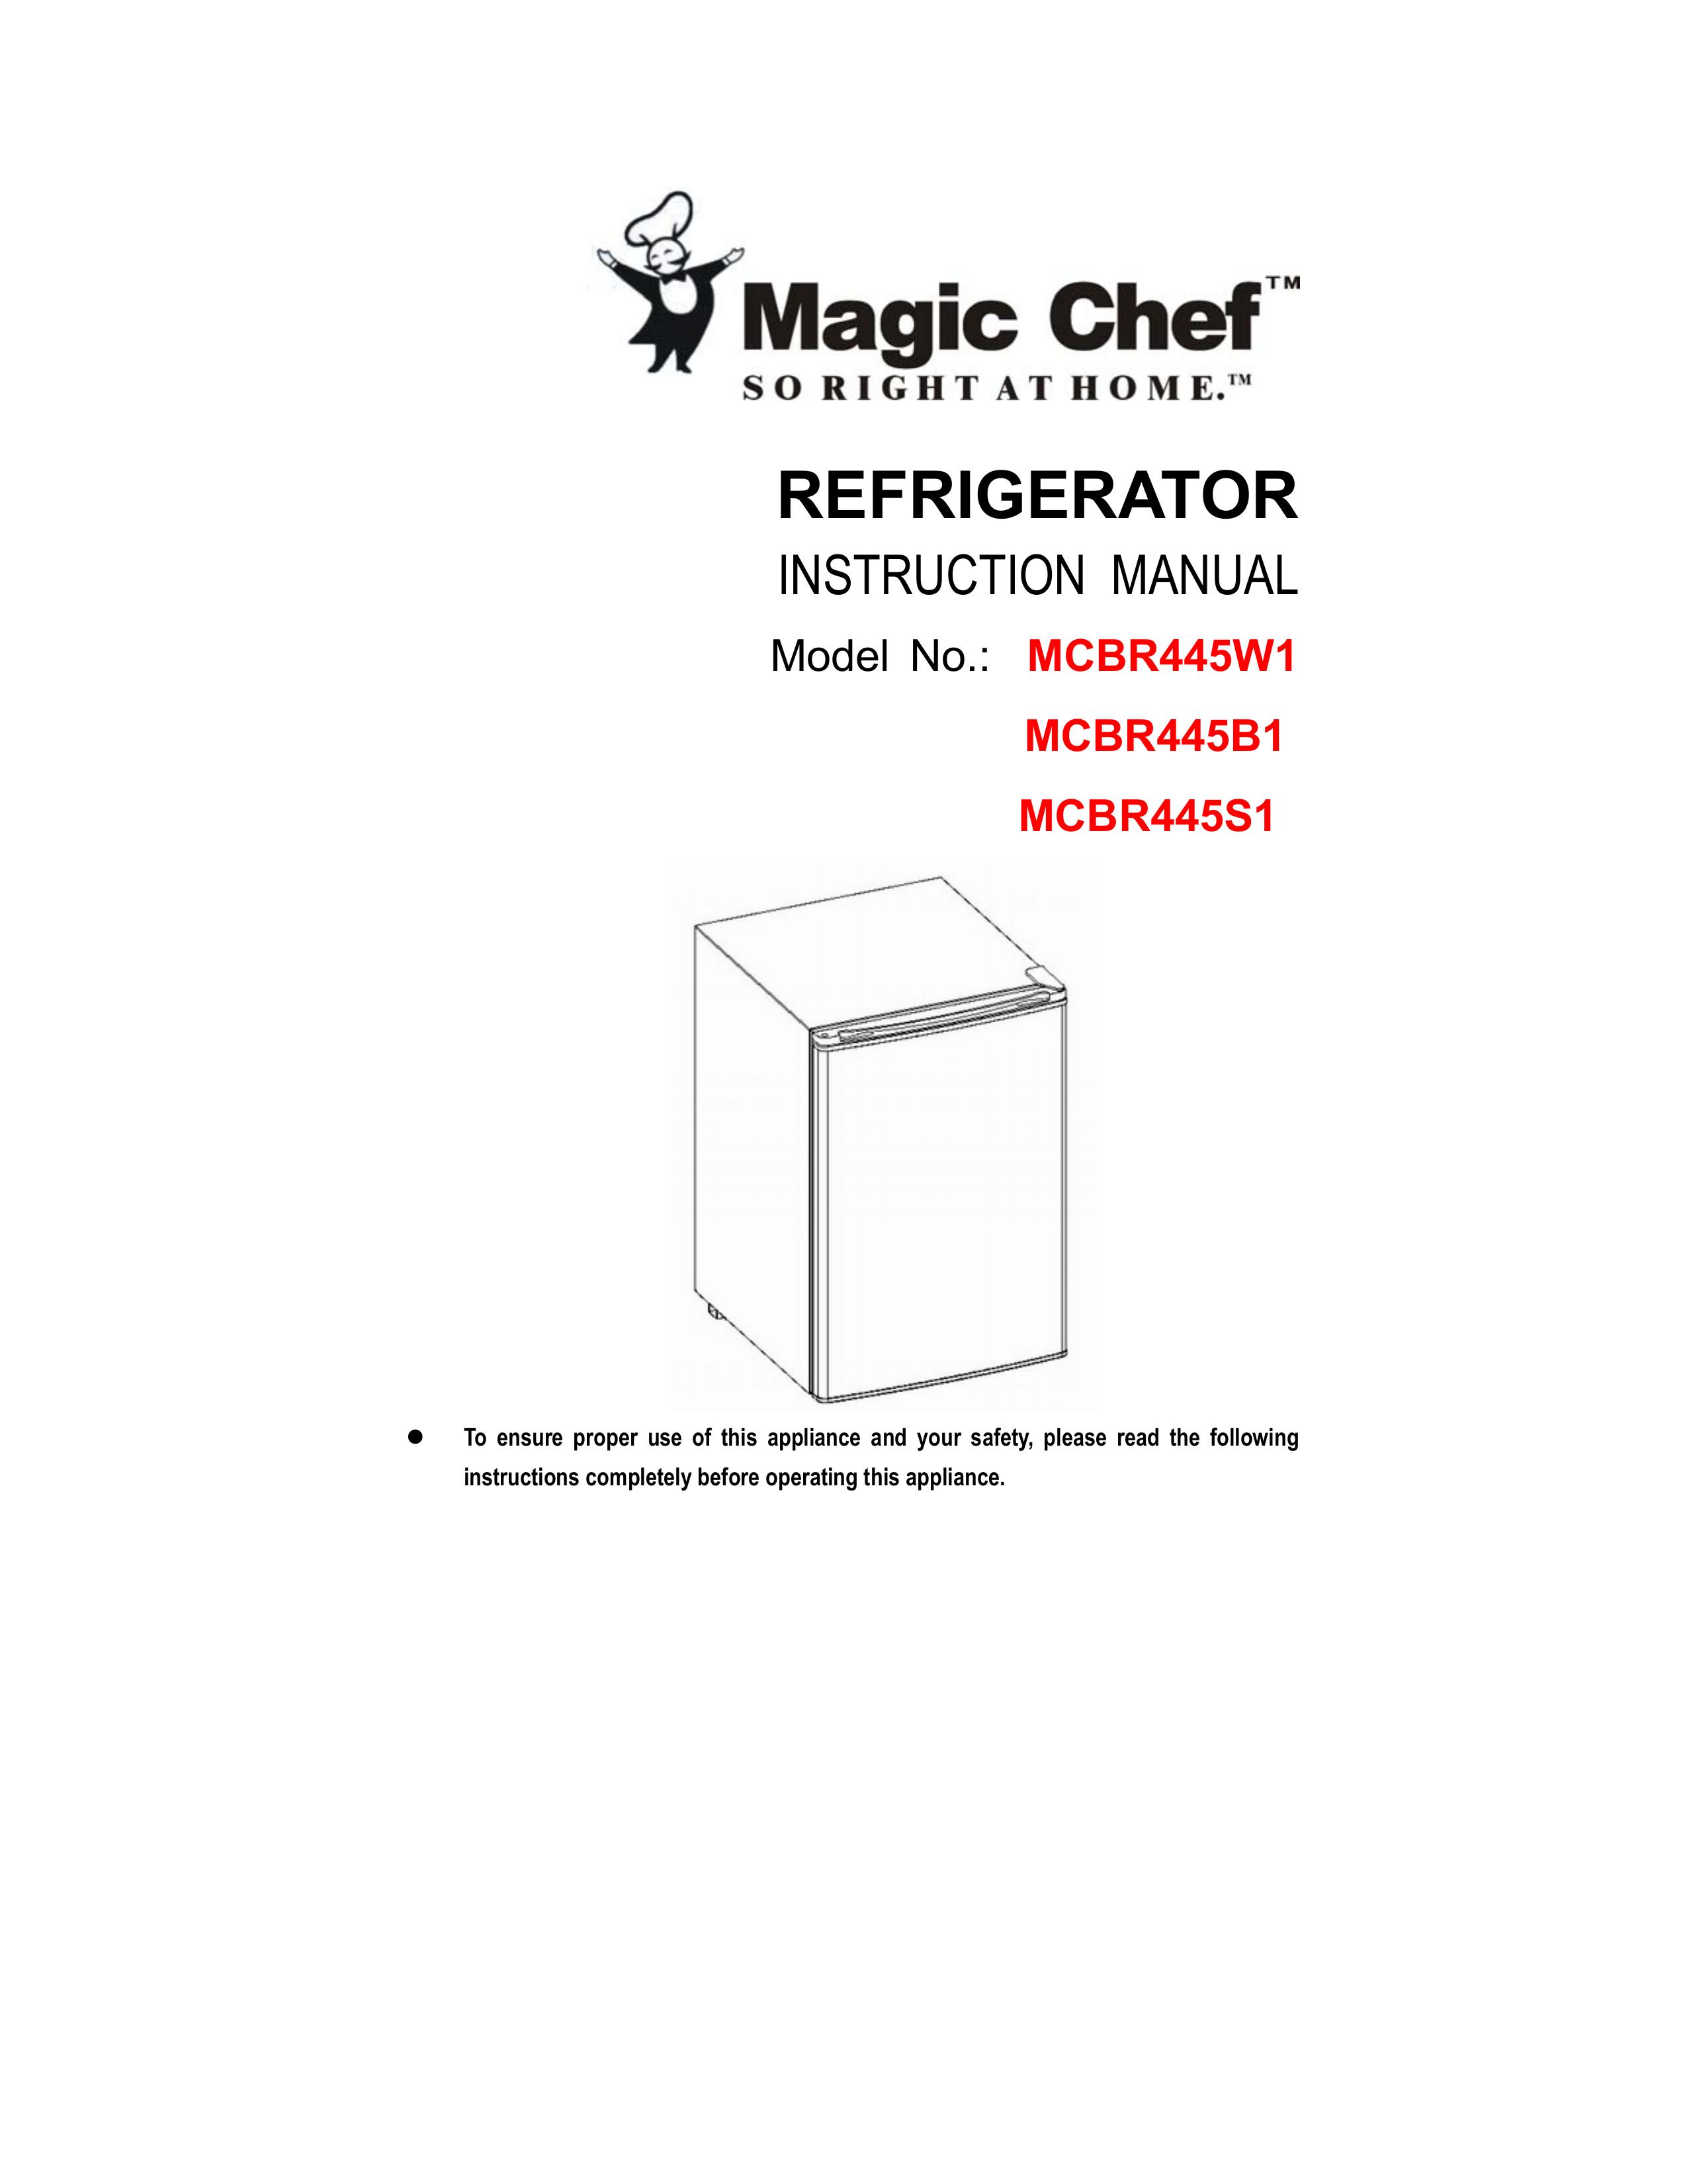 Magic Chef MCBR445B1 Refrigerator User Manual